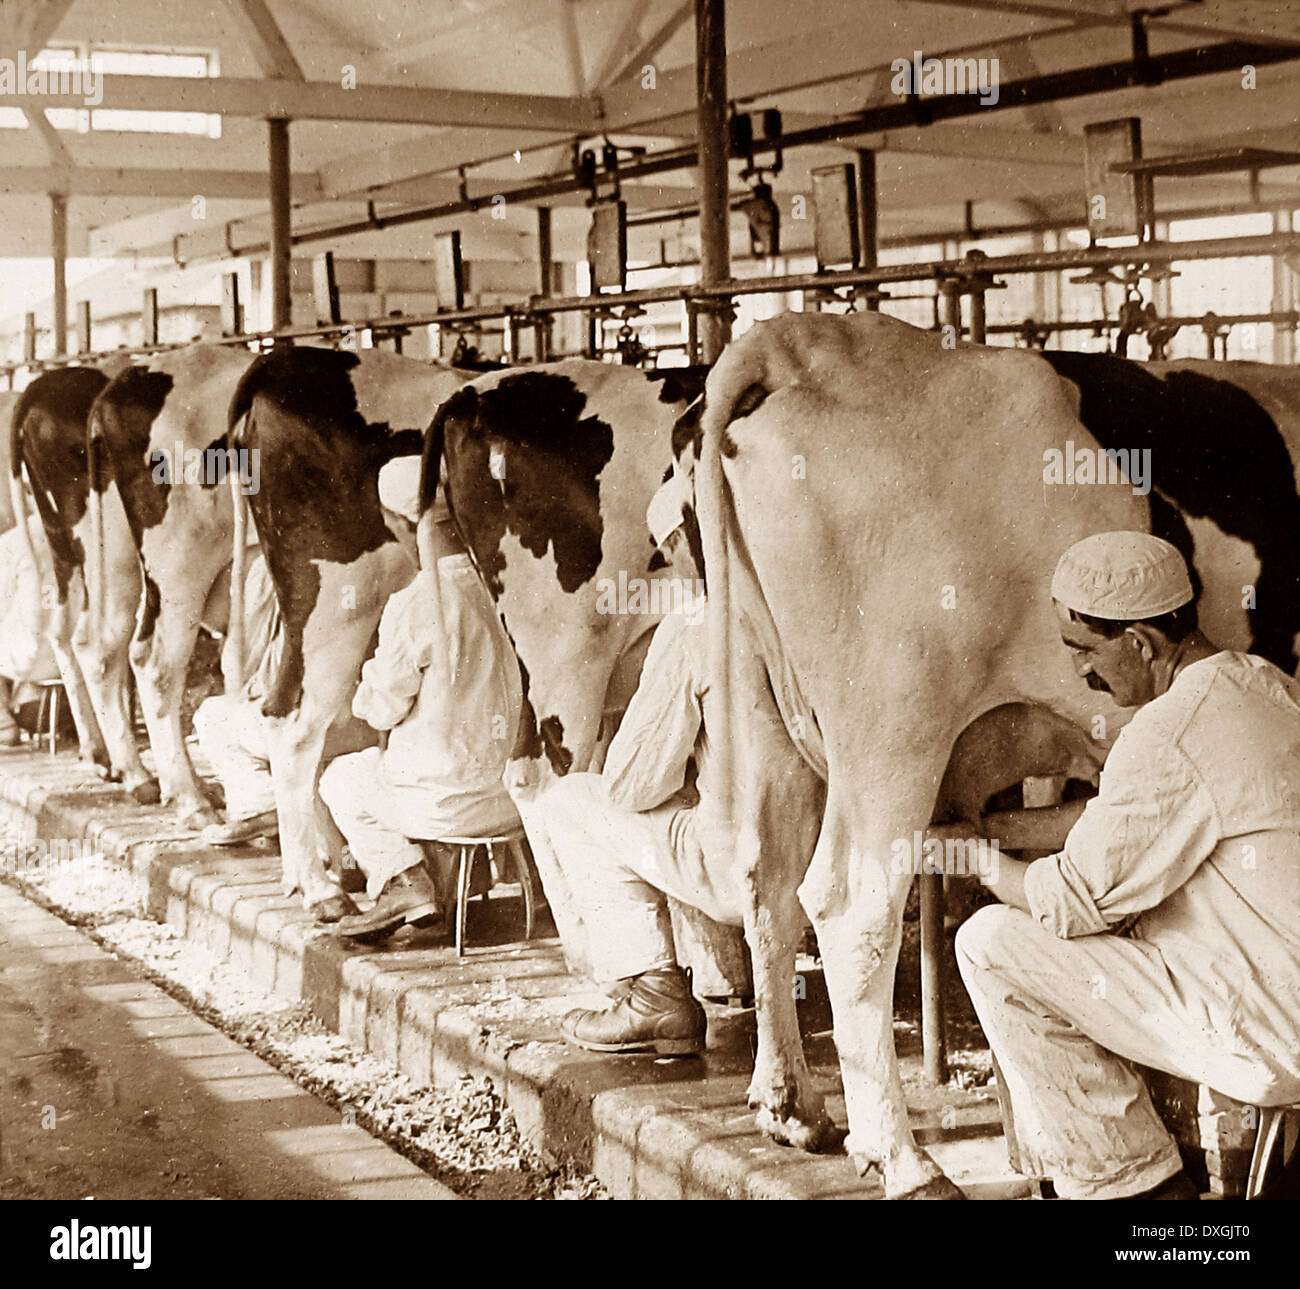 Vintage Dairy Farm